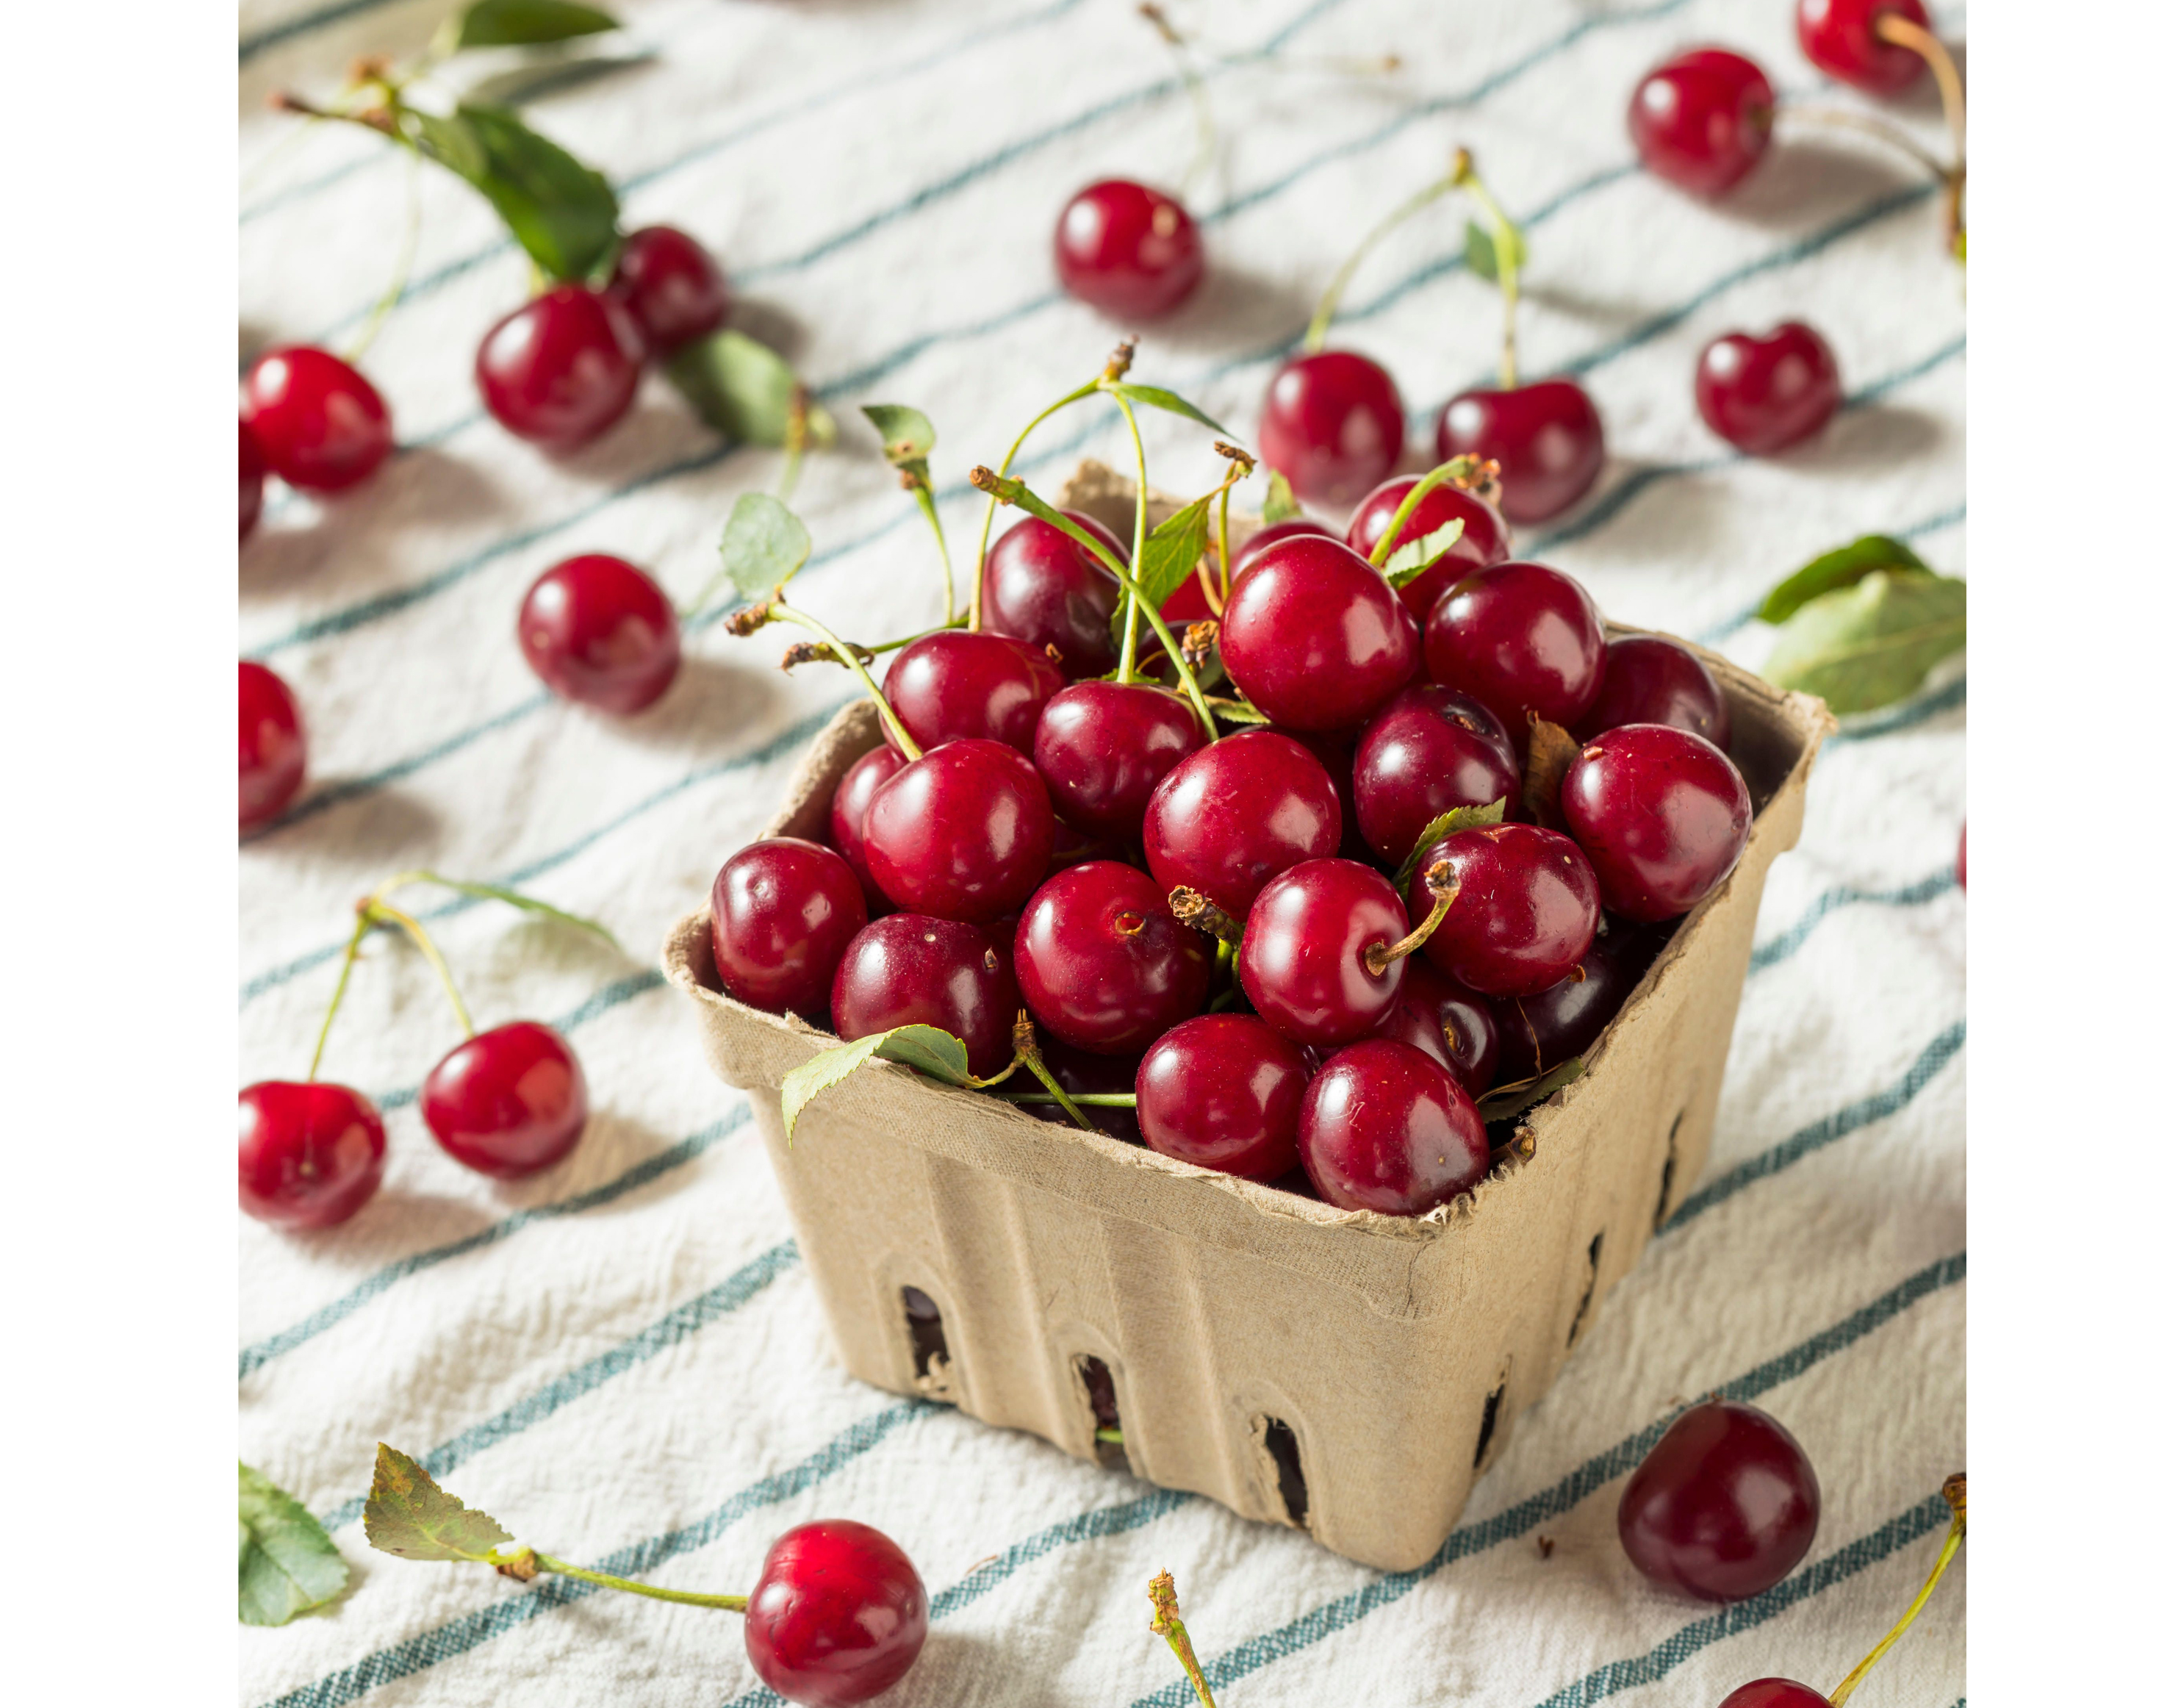 Organic tart cherries in basketet